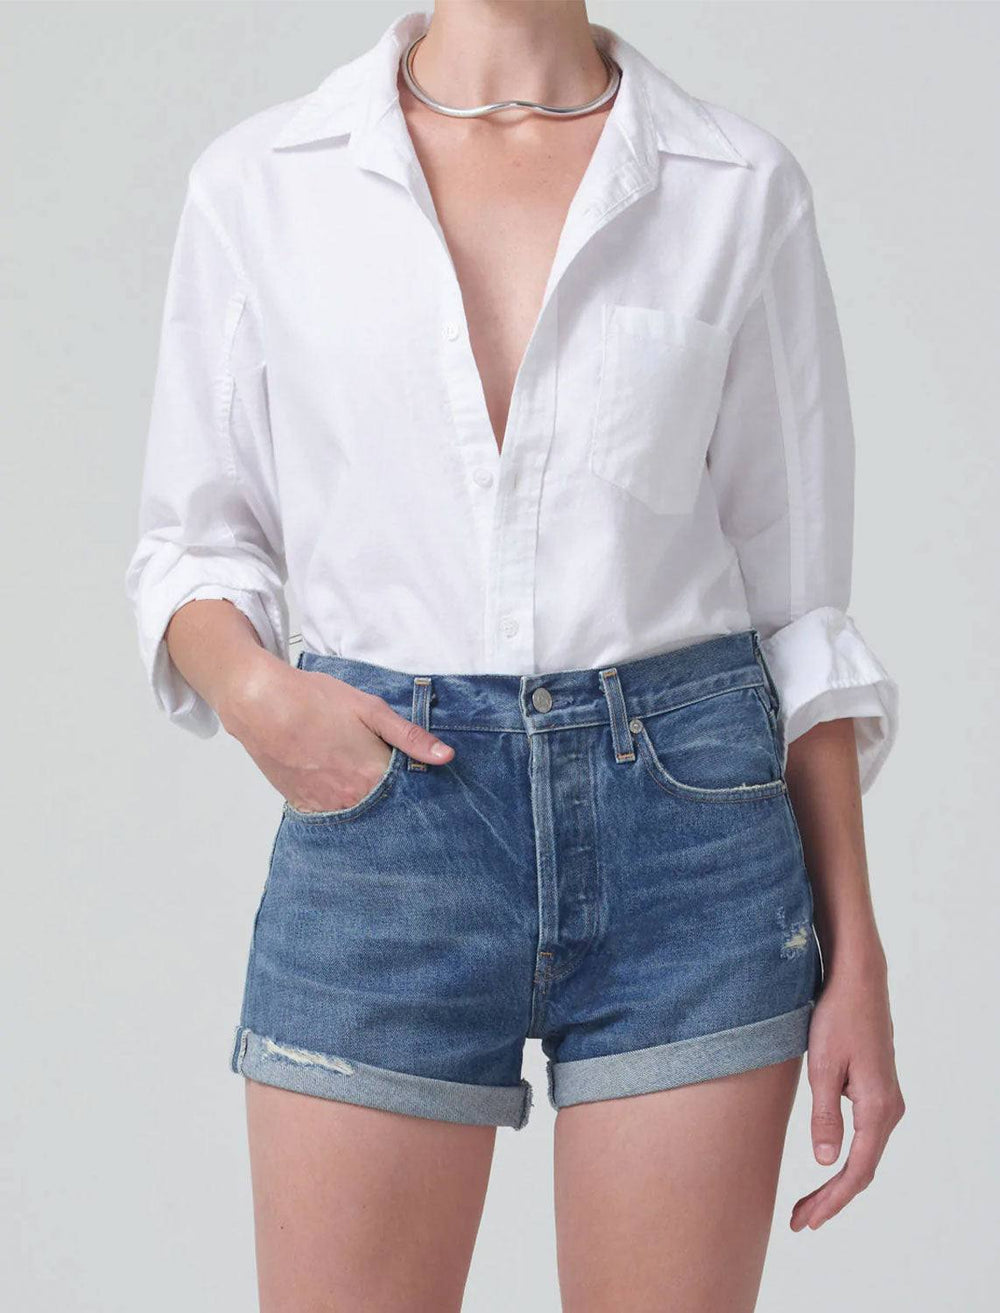 model wearing kayla shrunken shirt in optic white with jean shorts 